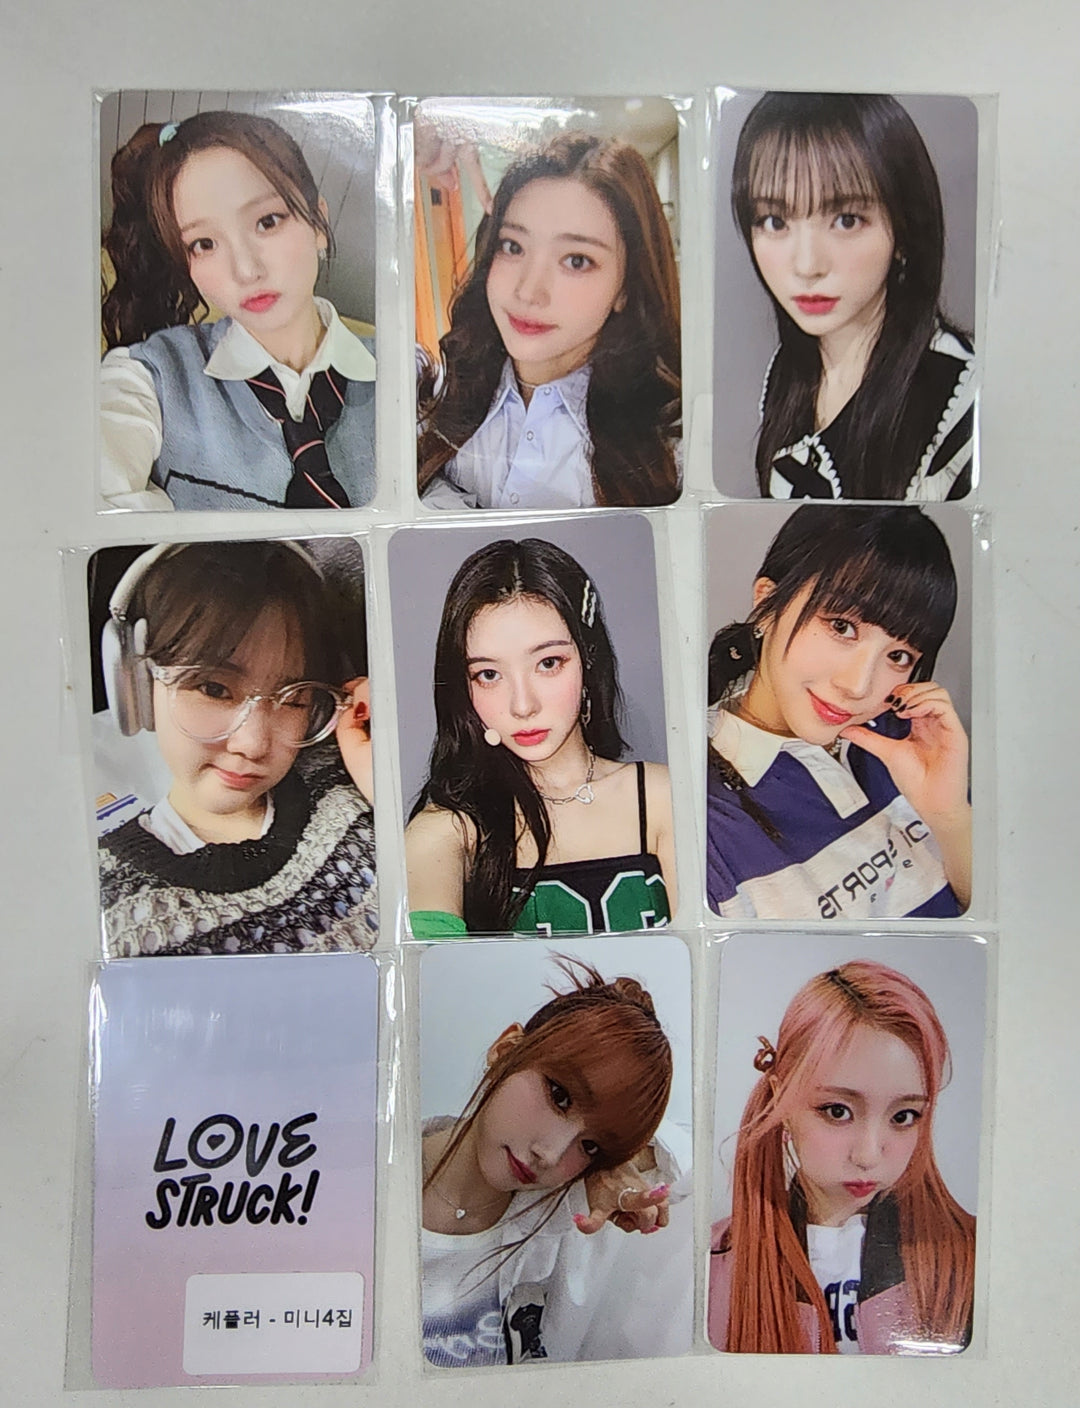 Kep1er "LOVESTRUCK! " - Music & Drama Fansign Event Photocard